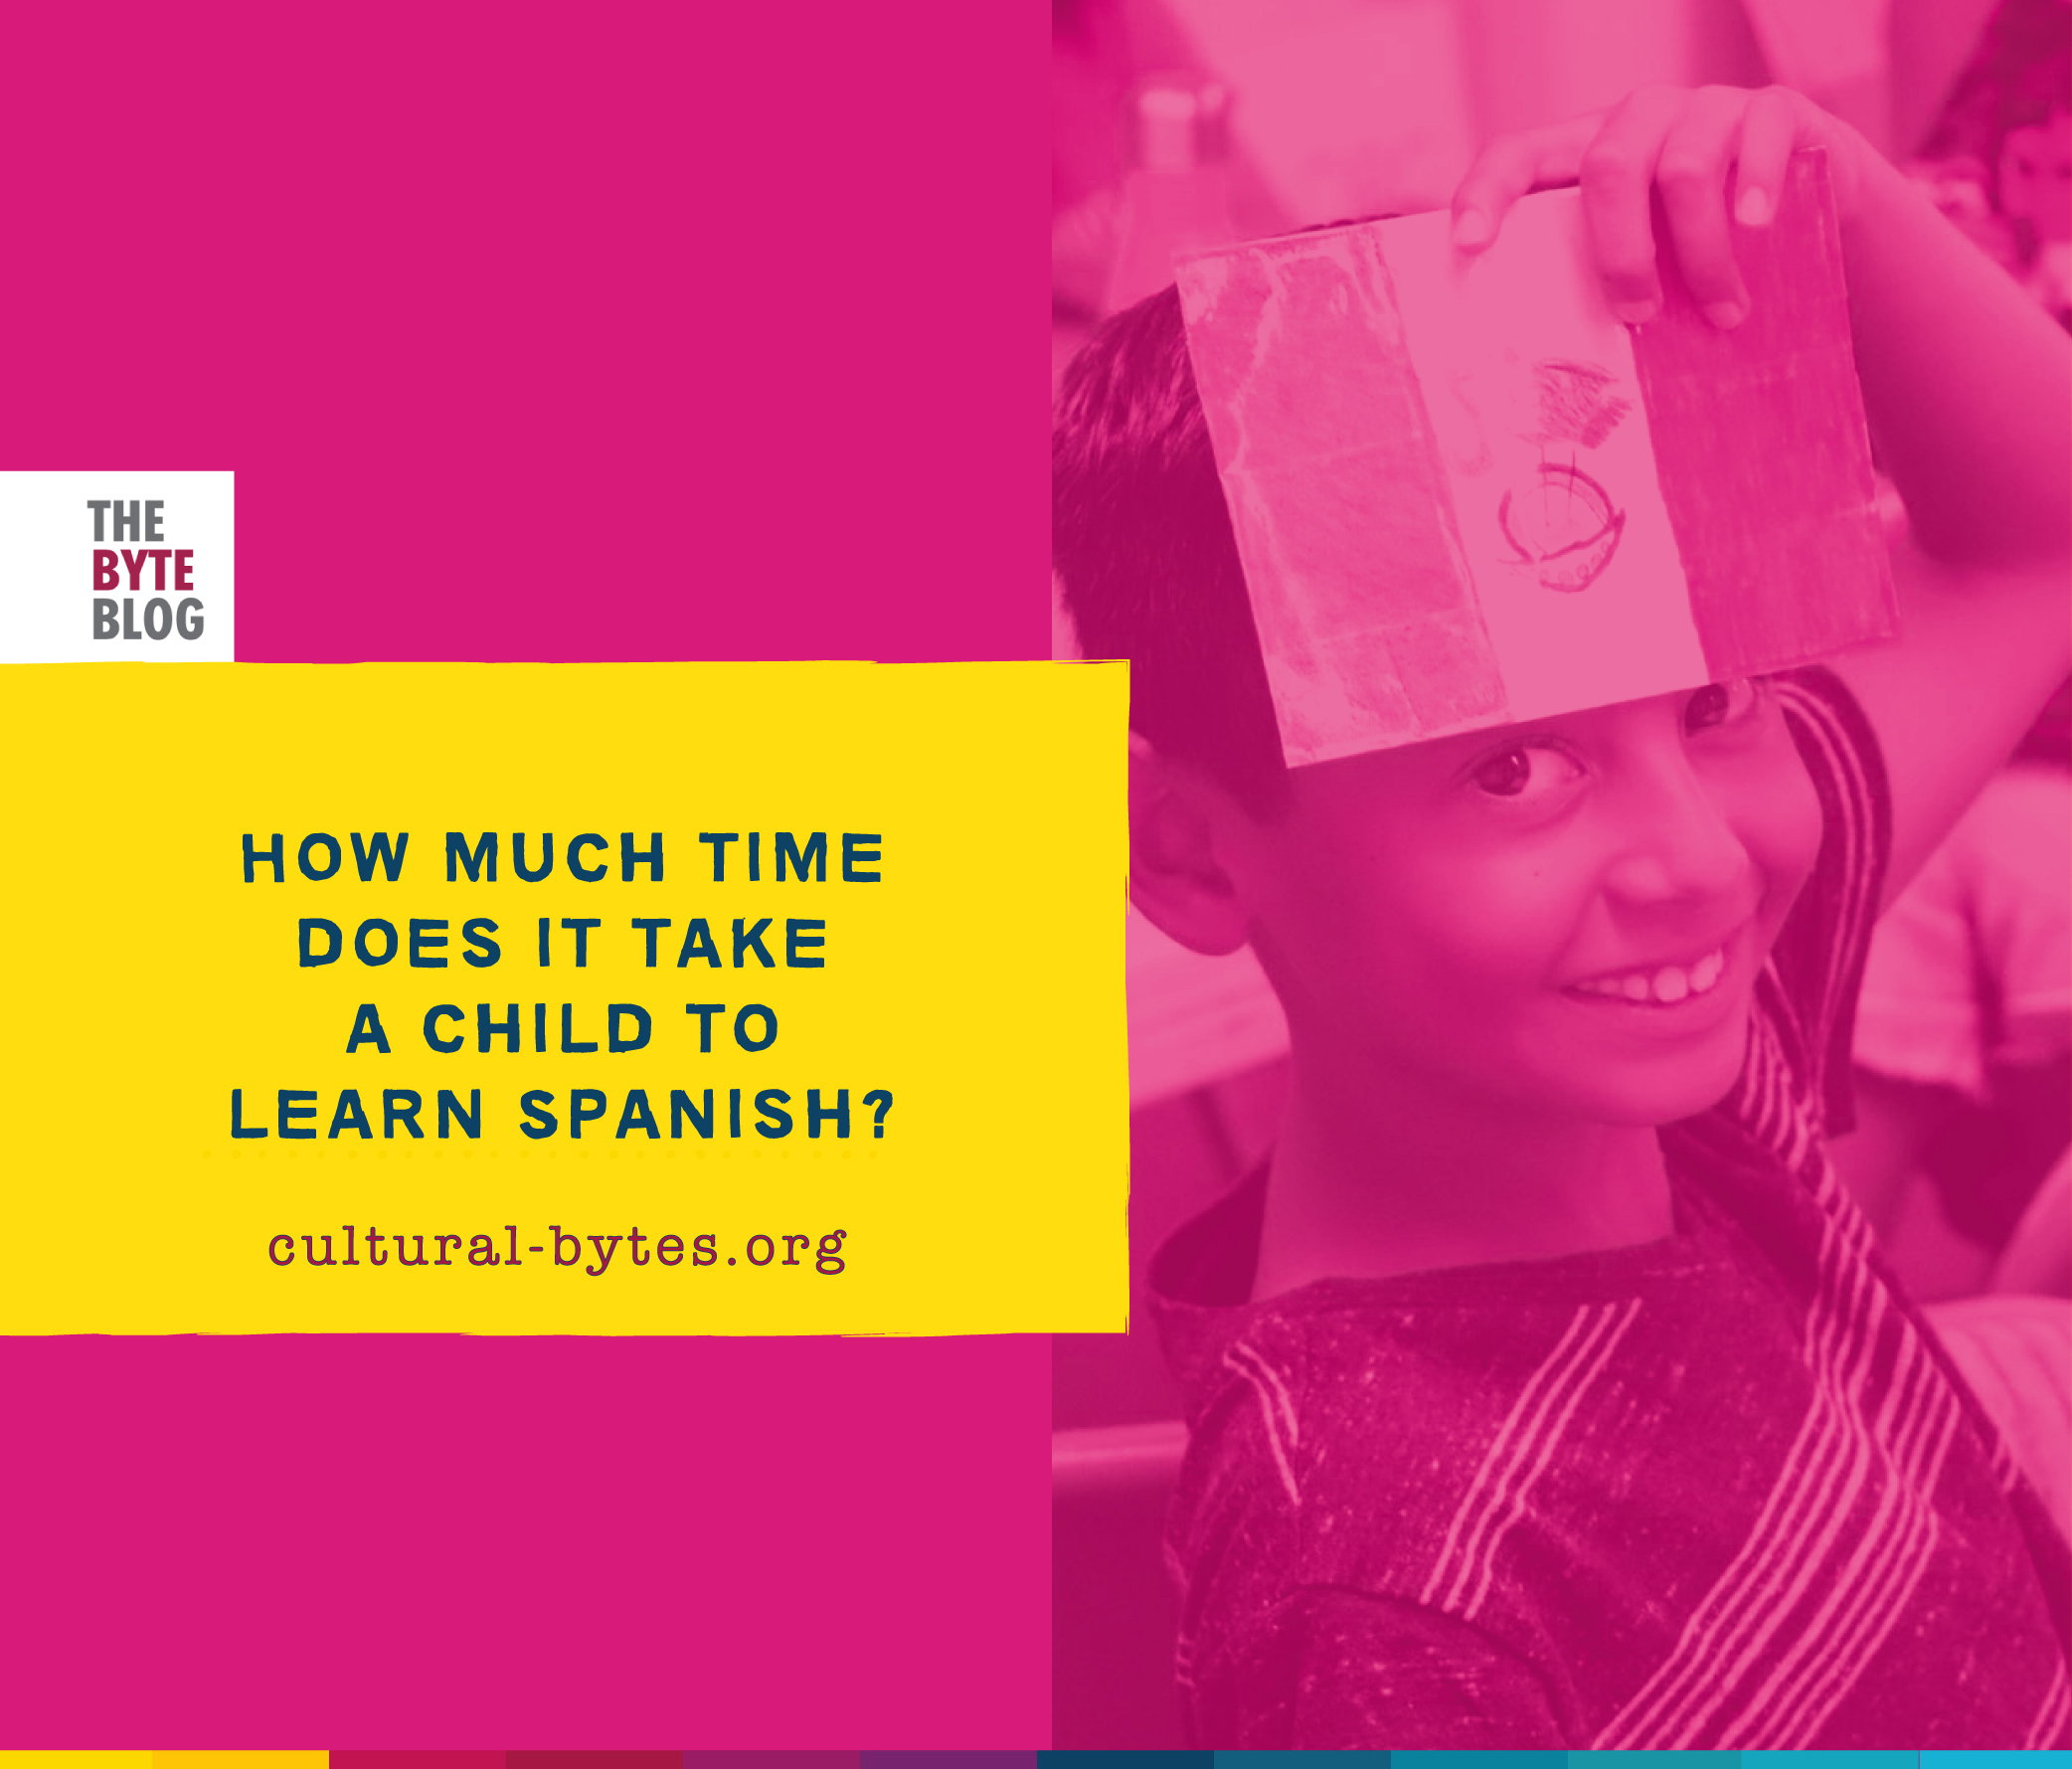 kids to learn Spanish